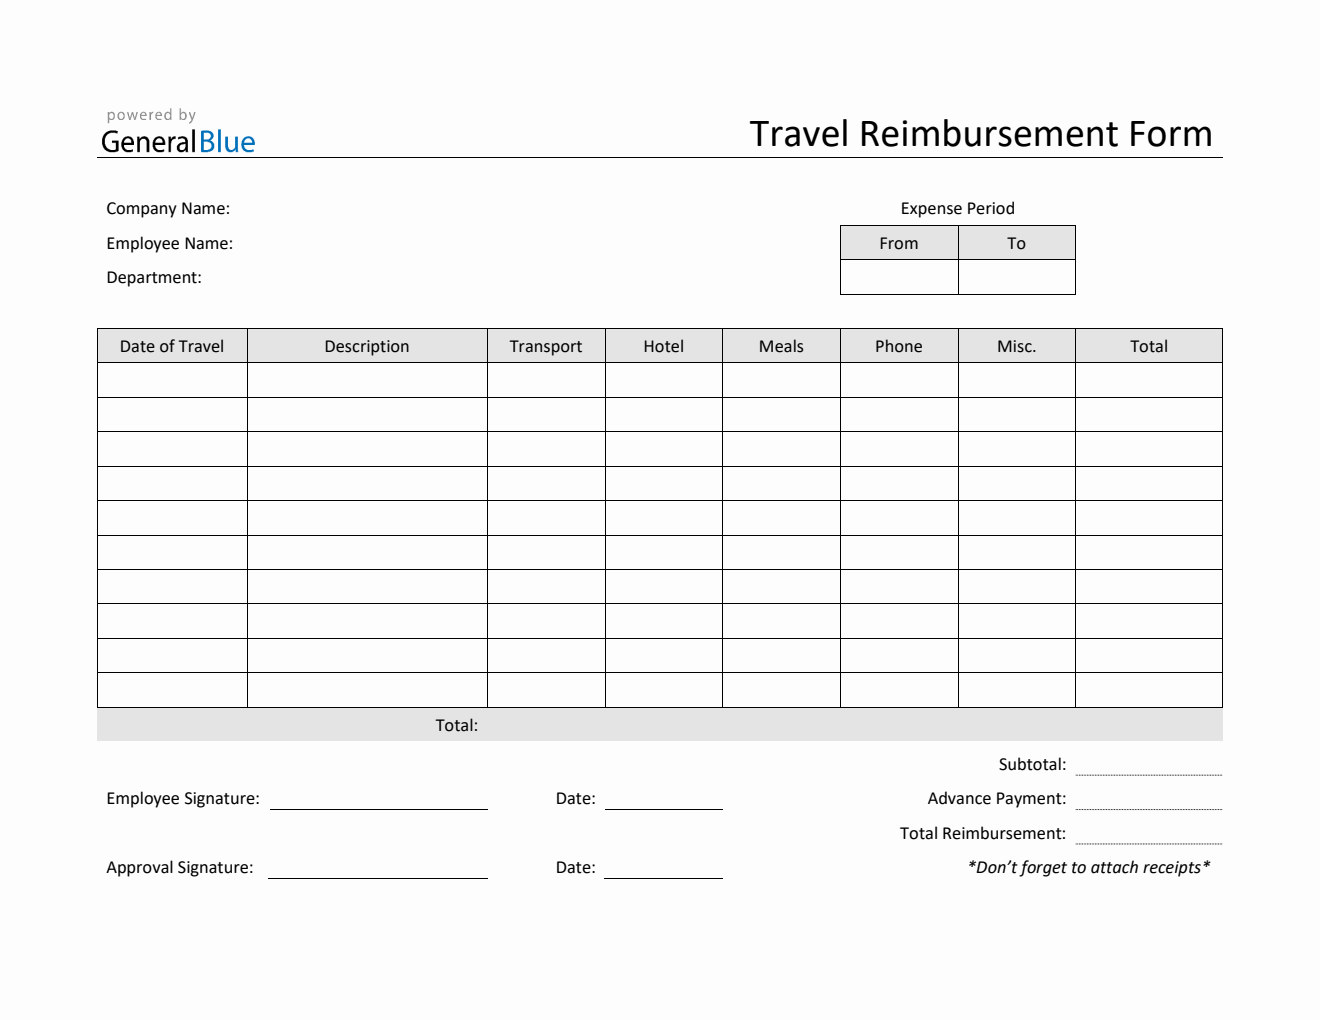 Travel Reimbursement Form in PDF (Simple)